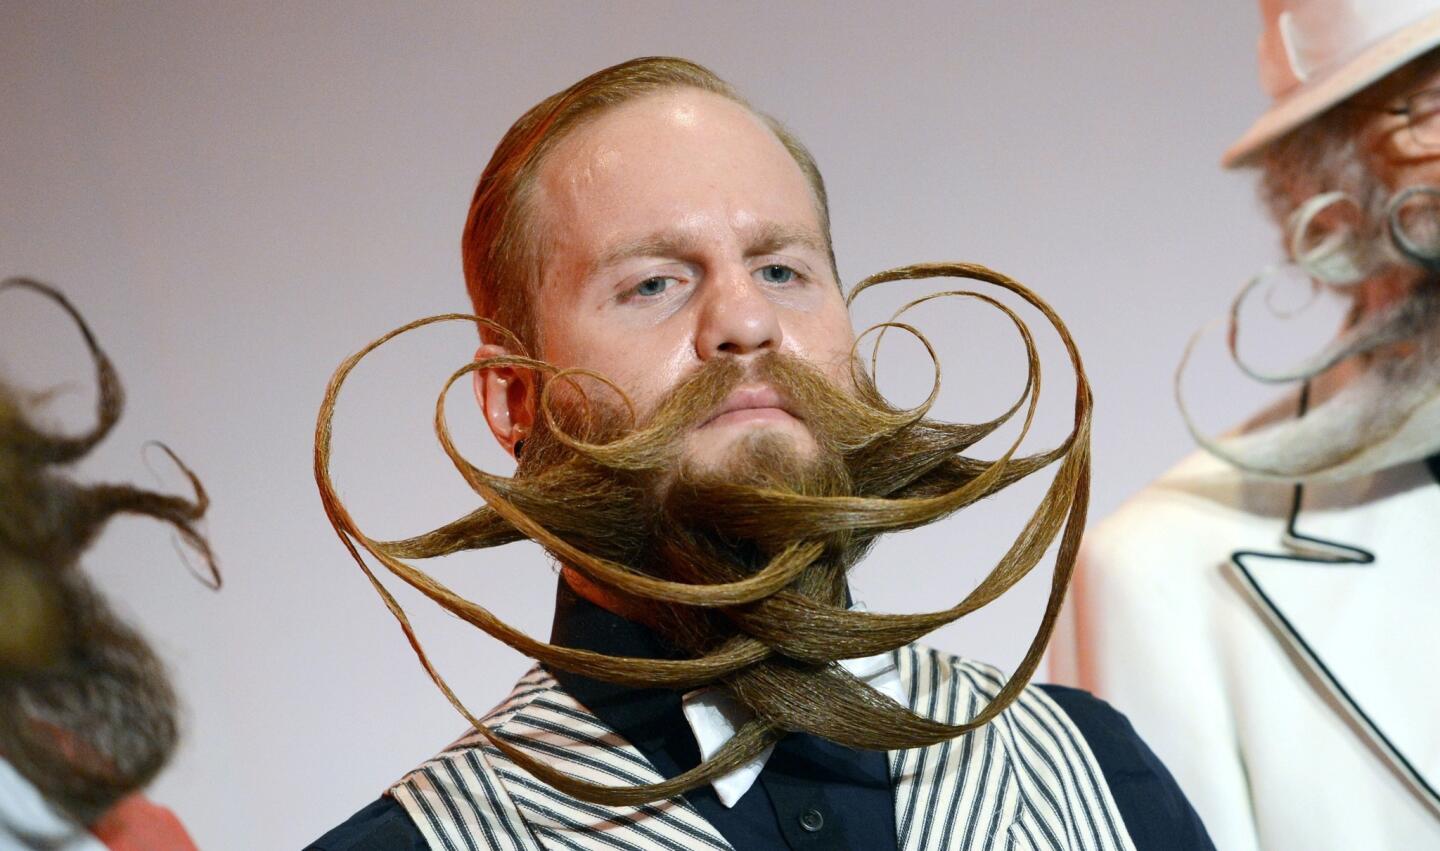 2013 World Beard and Moustache Championships